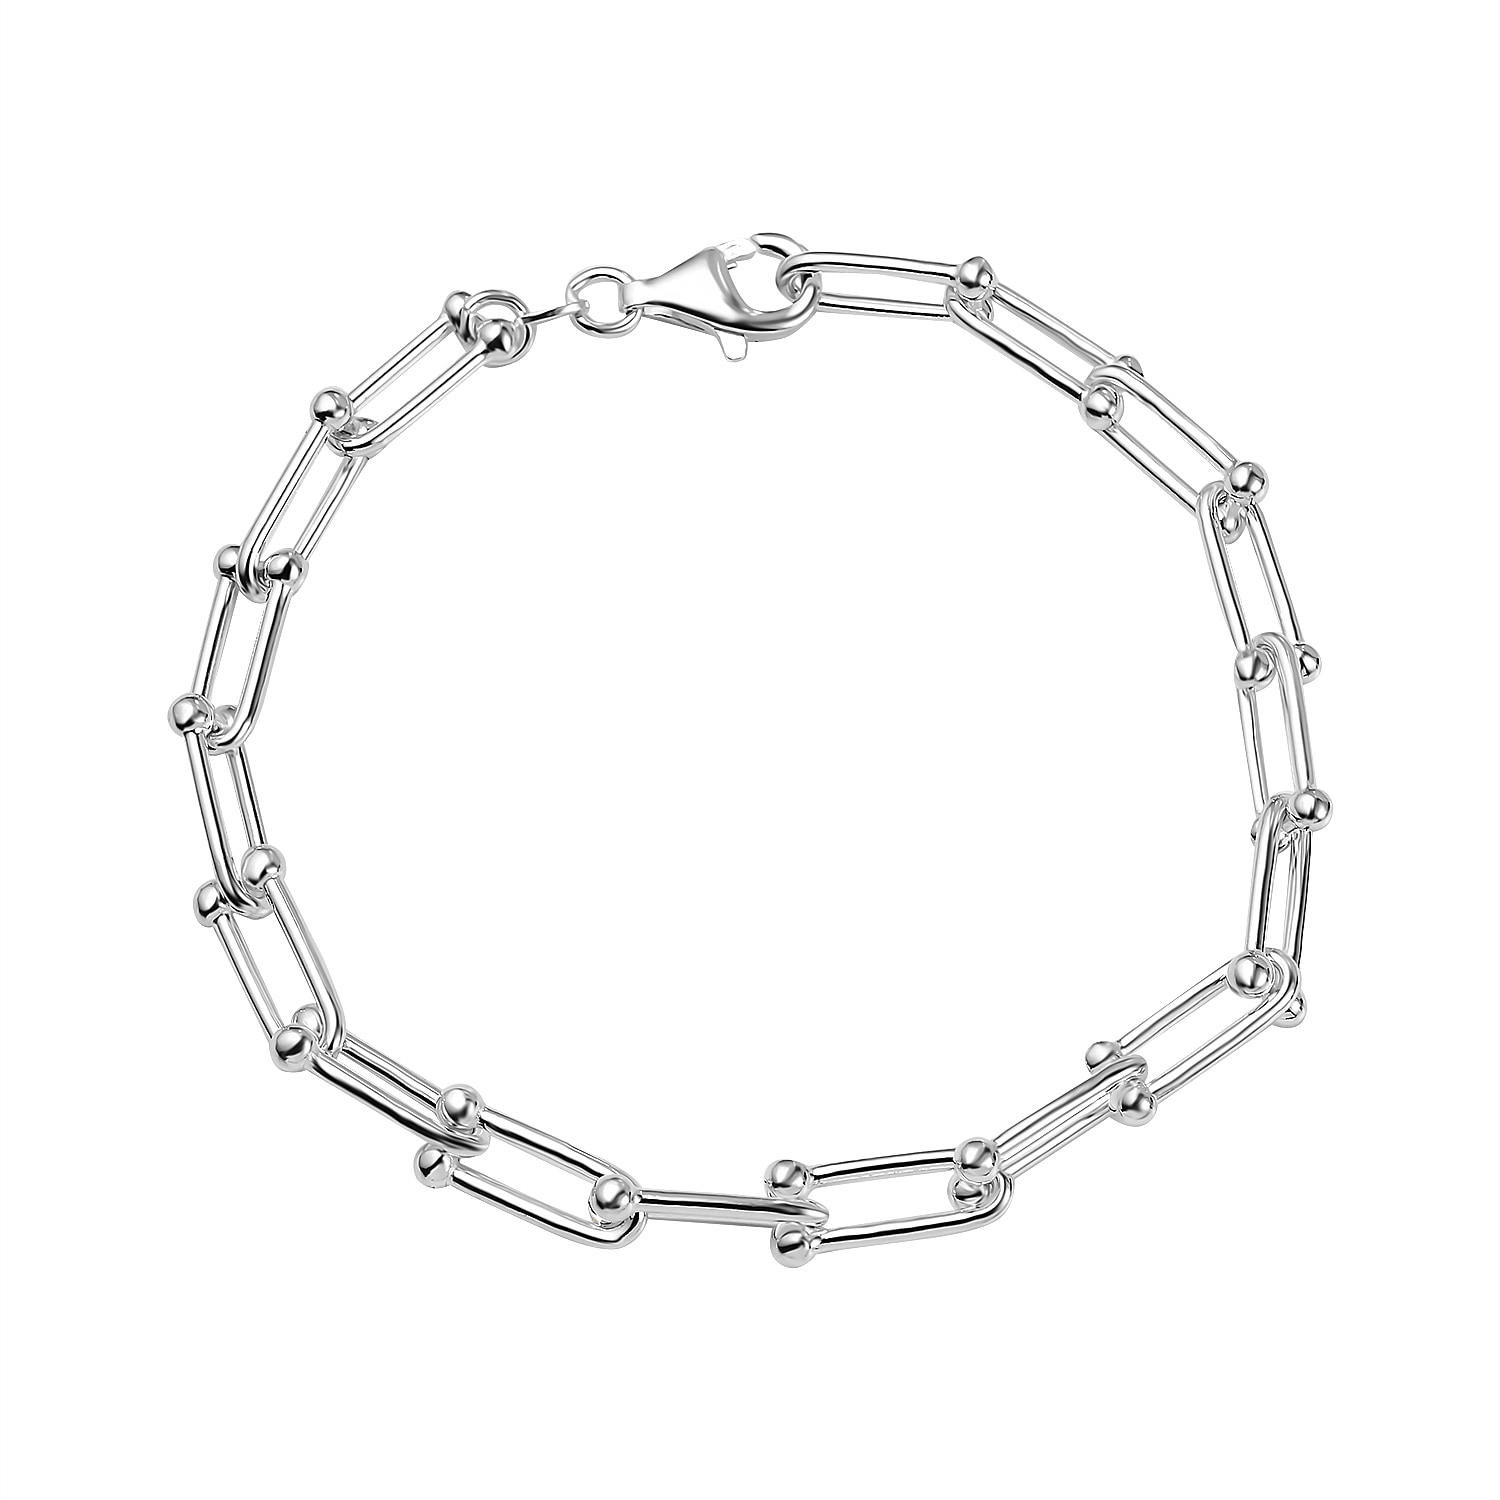 Bangkok Closeout - Sterling Silver U Shaped Ball Link Bracelet (Size - 8, Silver Wt 11.80 Gms